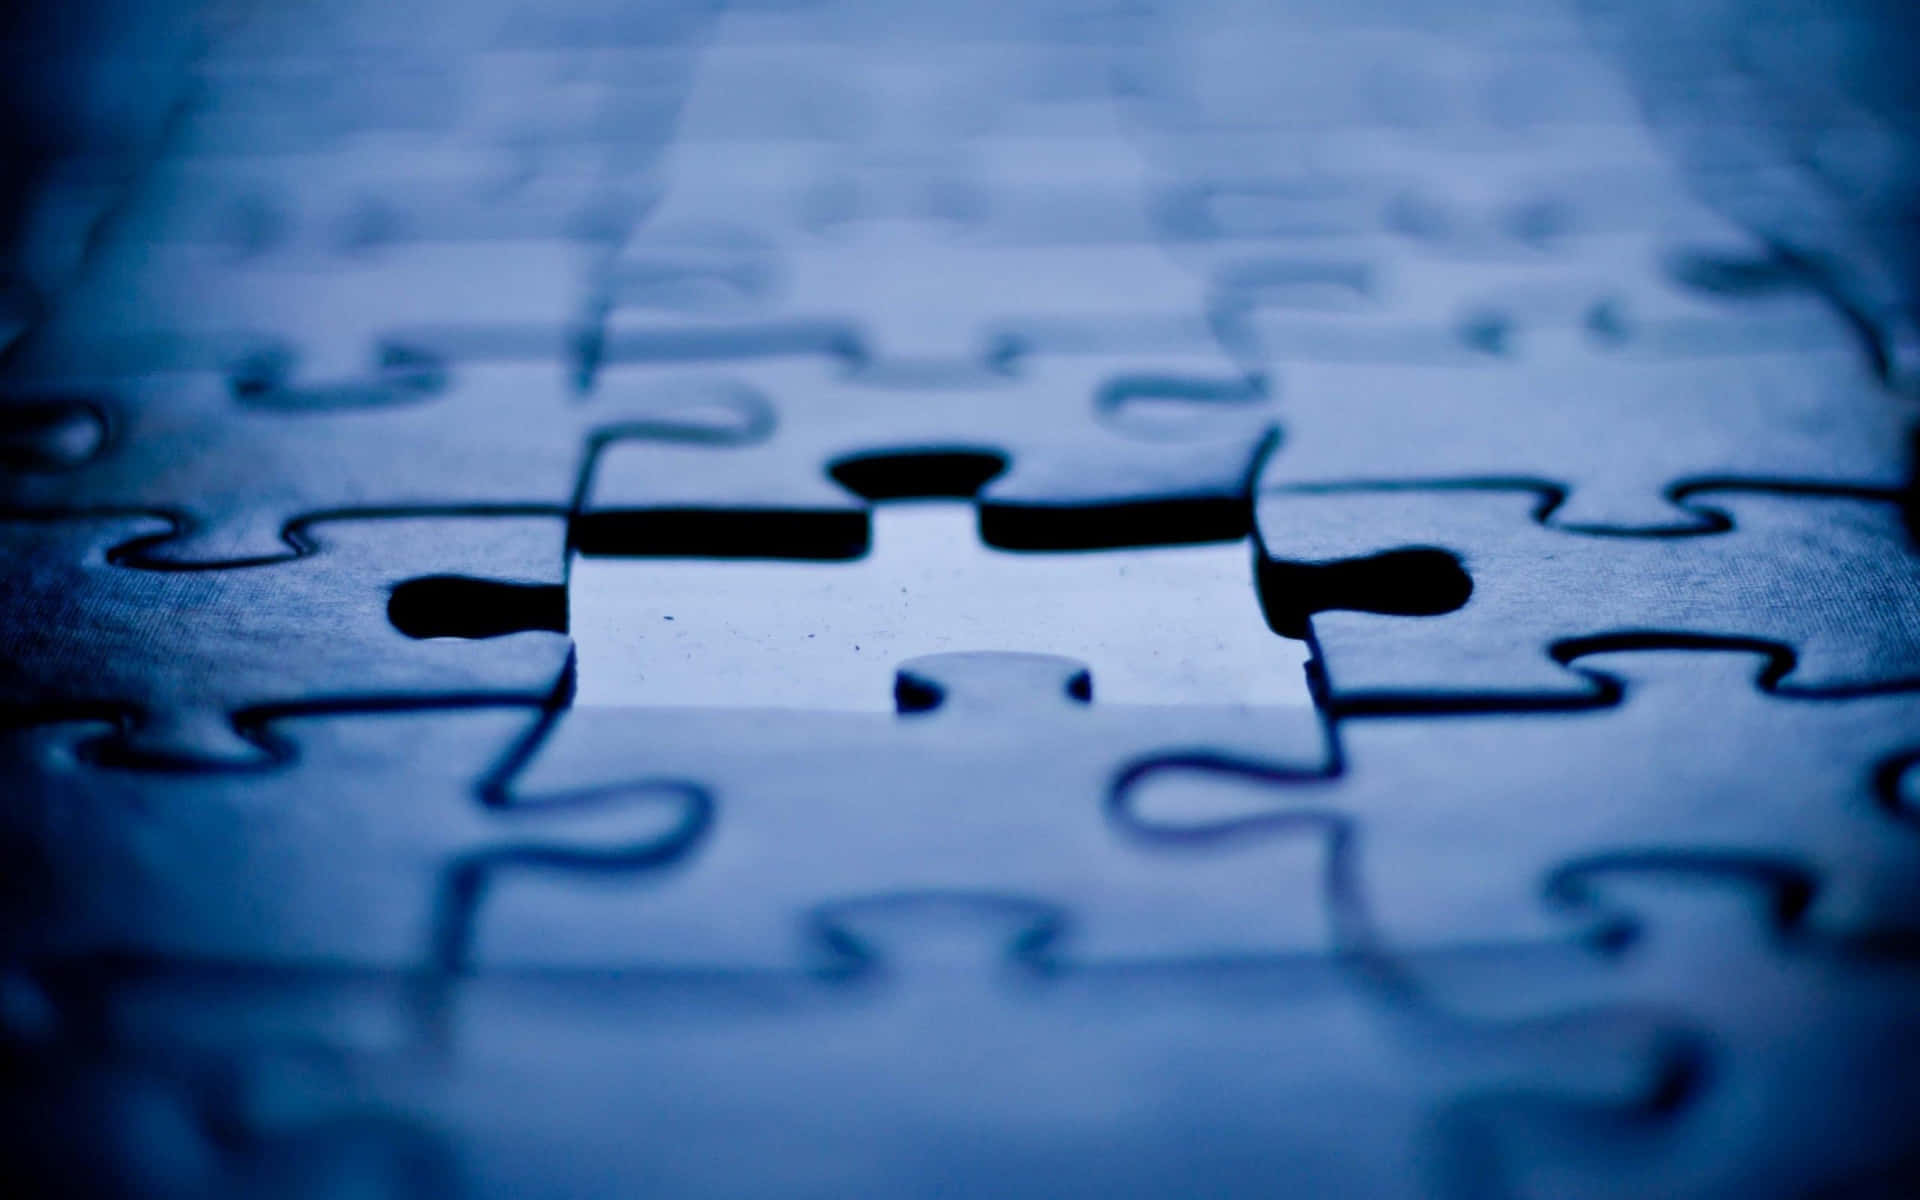 Macroblaues Jigsaw-puzzle-bild